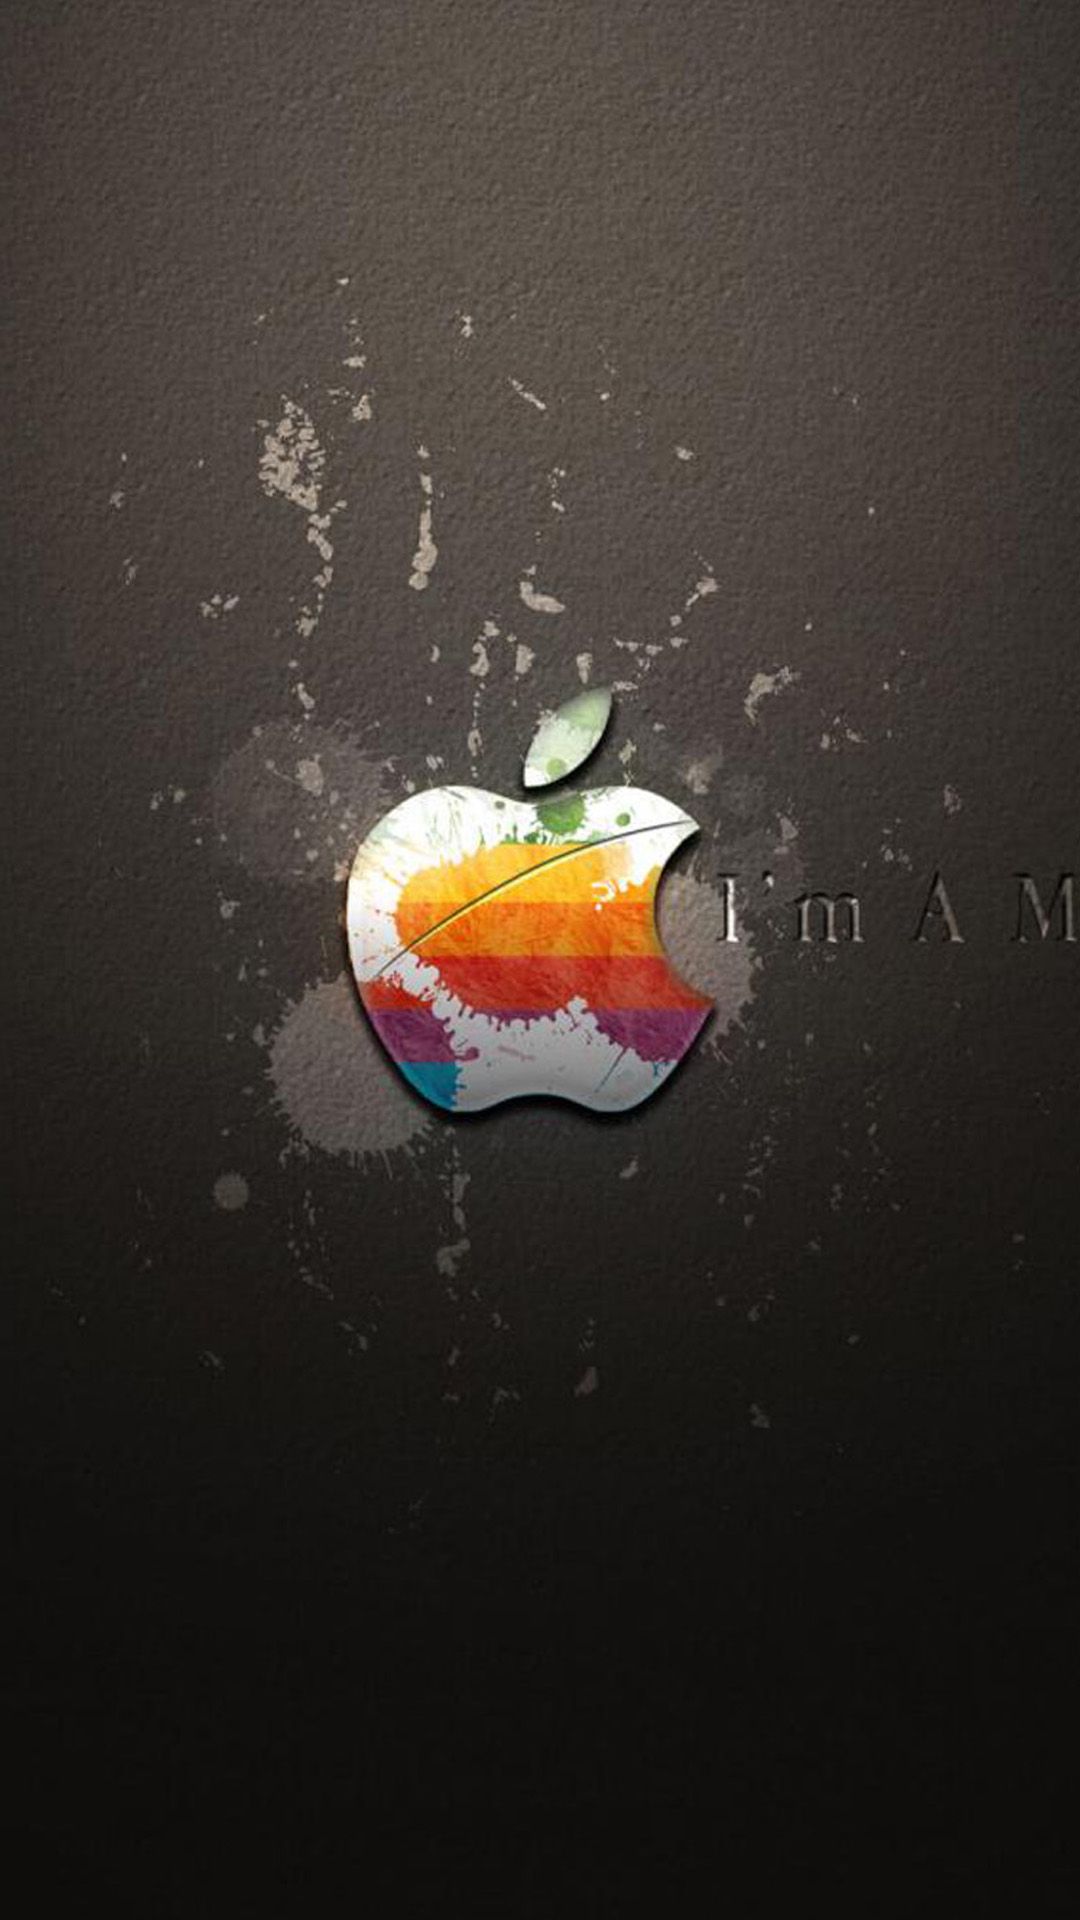 Apple iPhone Wallpaper